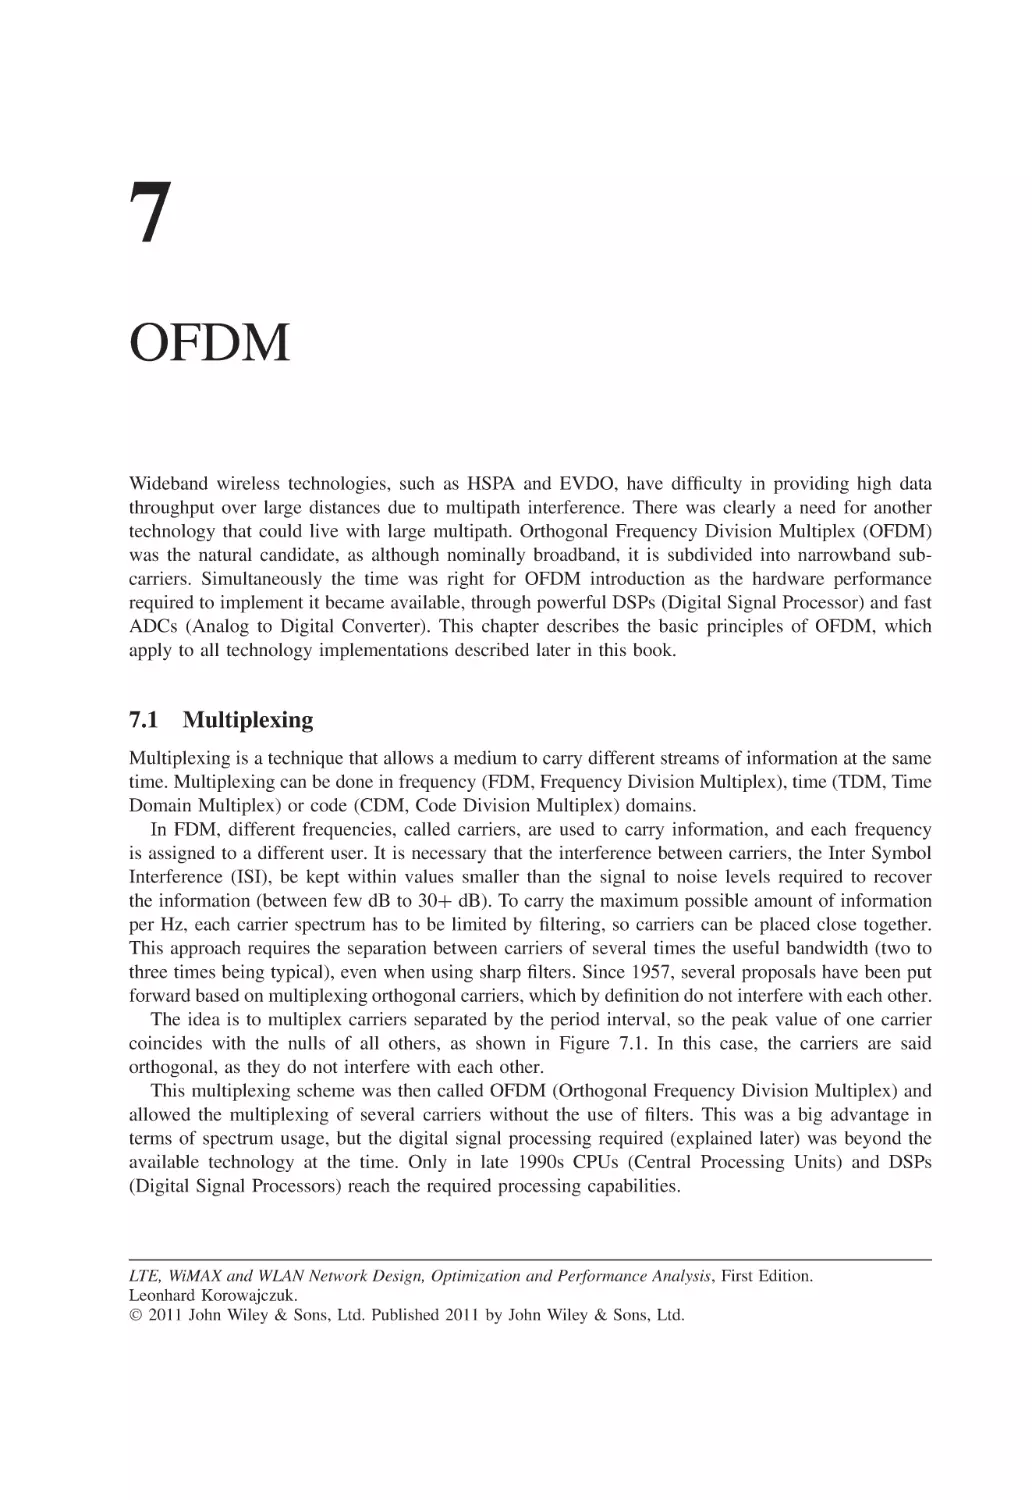 7 OFDM
7.1 Multiplexing